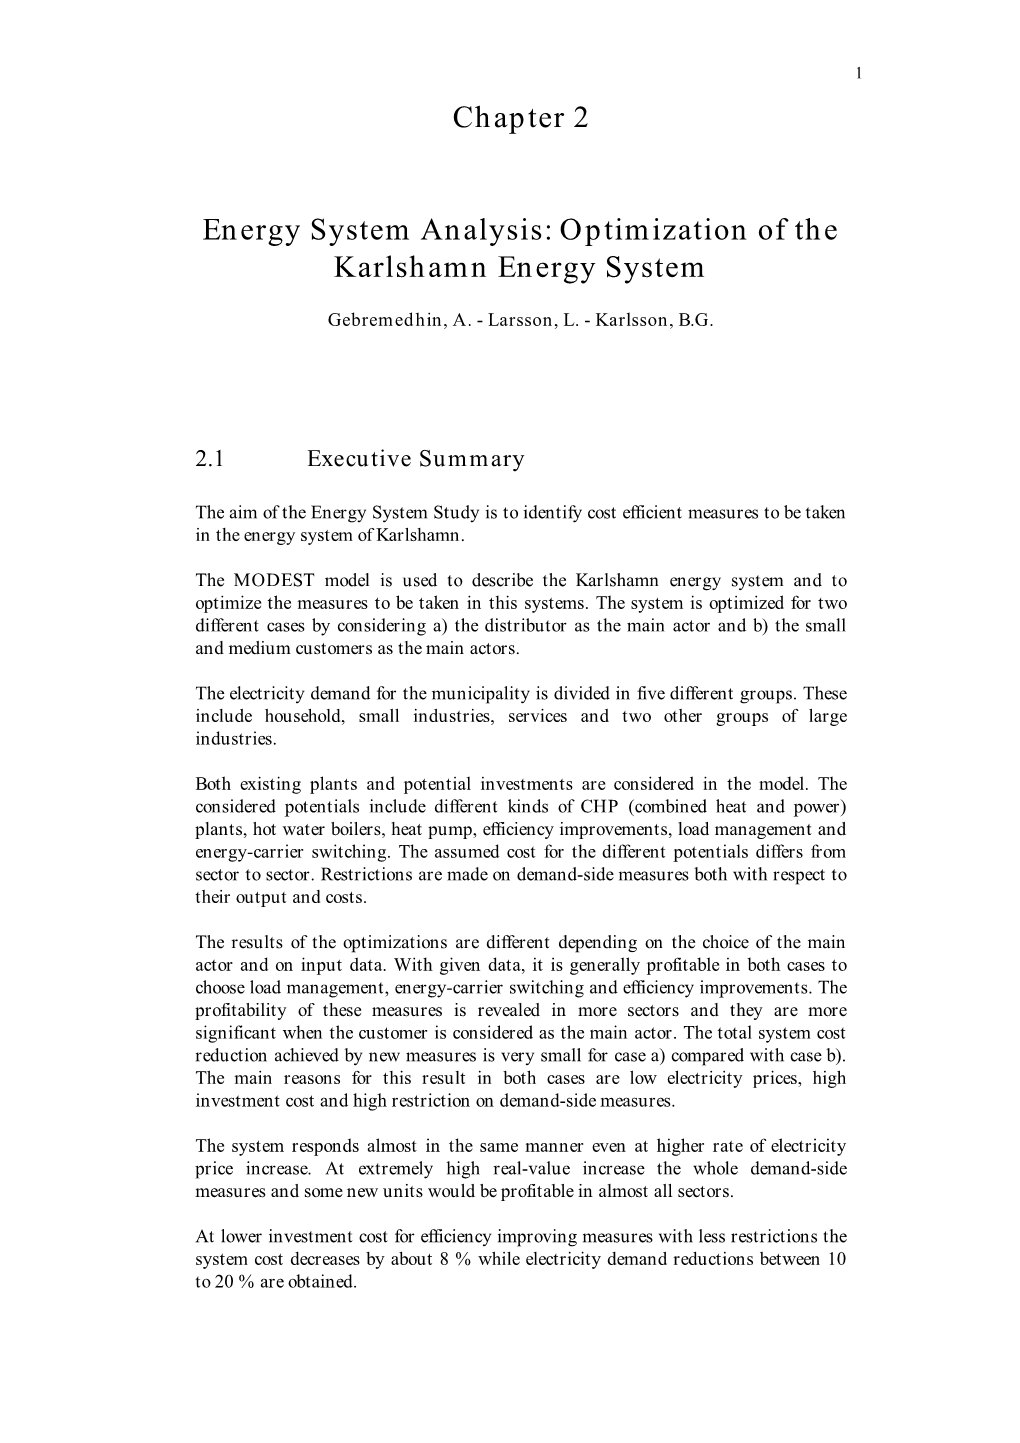 Chapter 2 Energy System Analysis: Optimization of the Karlshamn